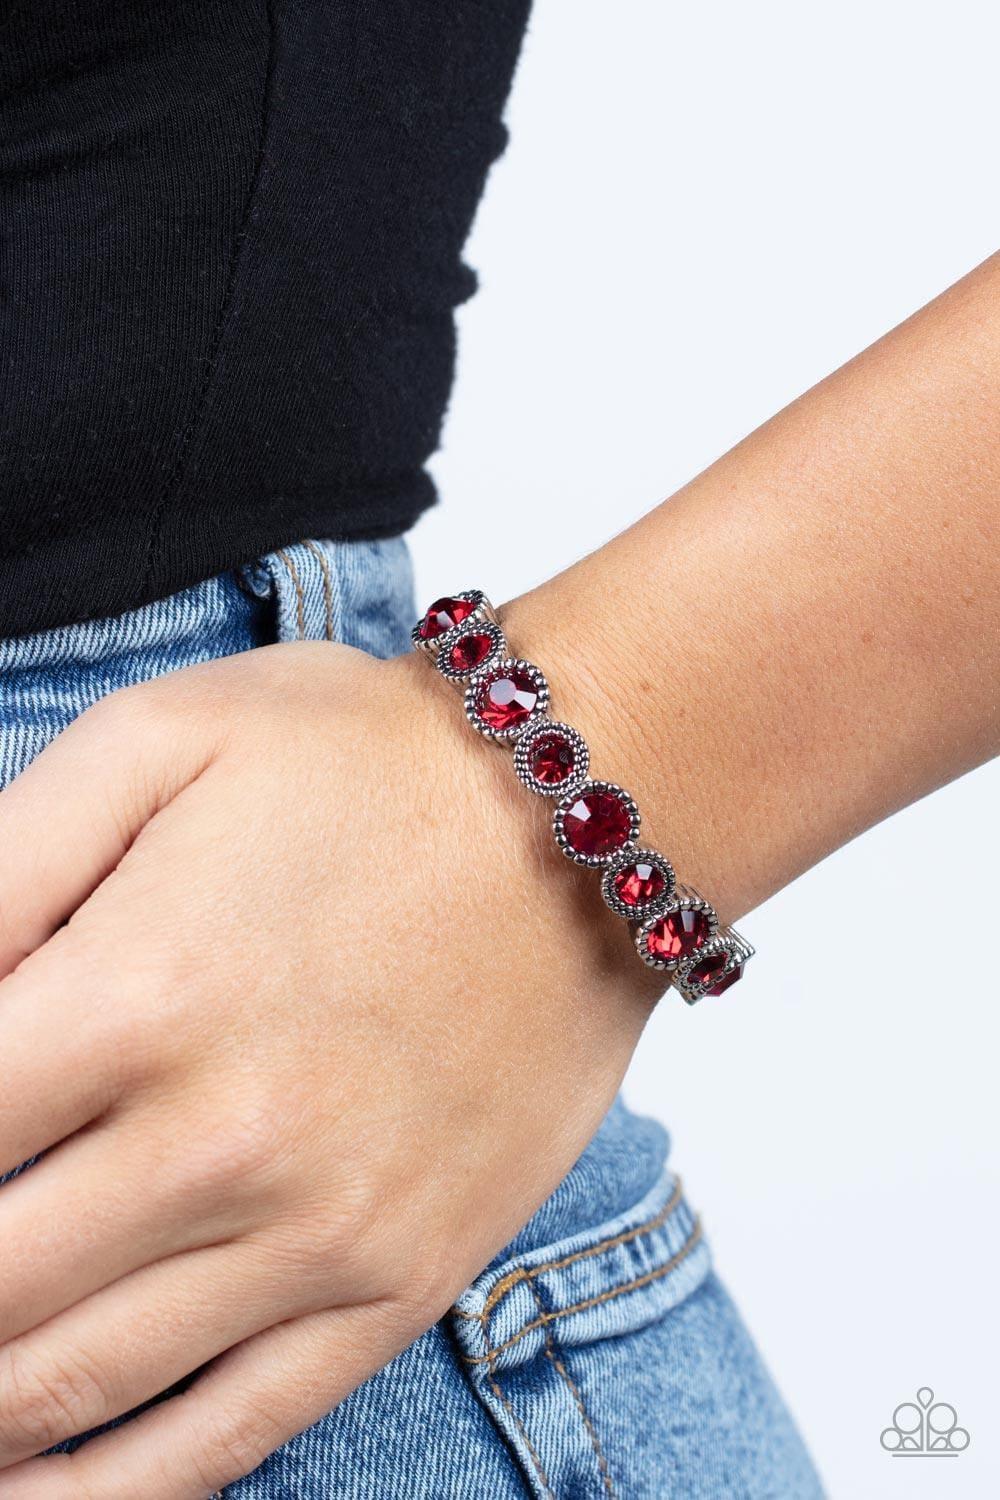 Paparazzi Accessories - Phenomenally Perennial - Red Bracelet - Bling by JessieK